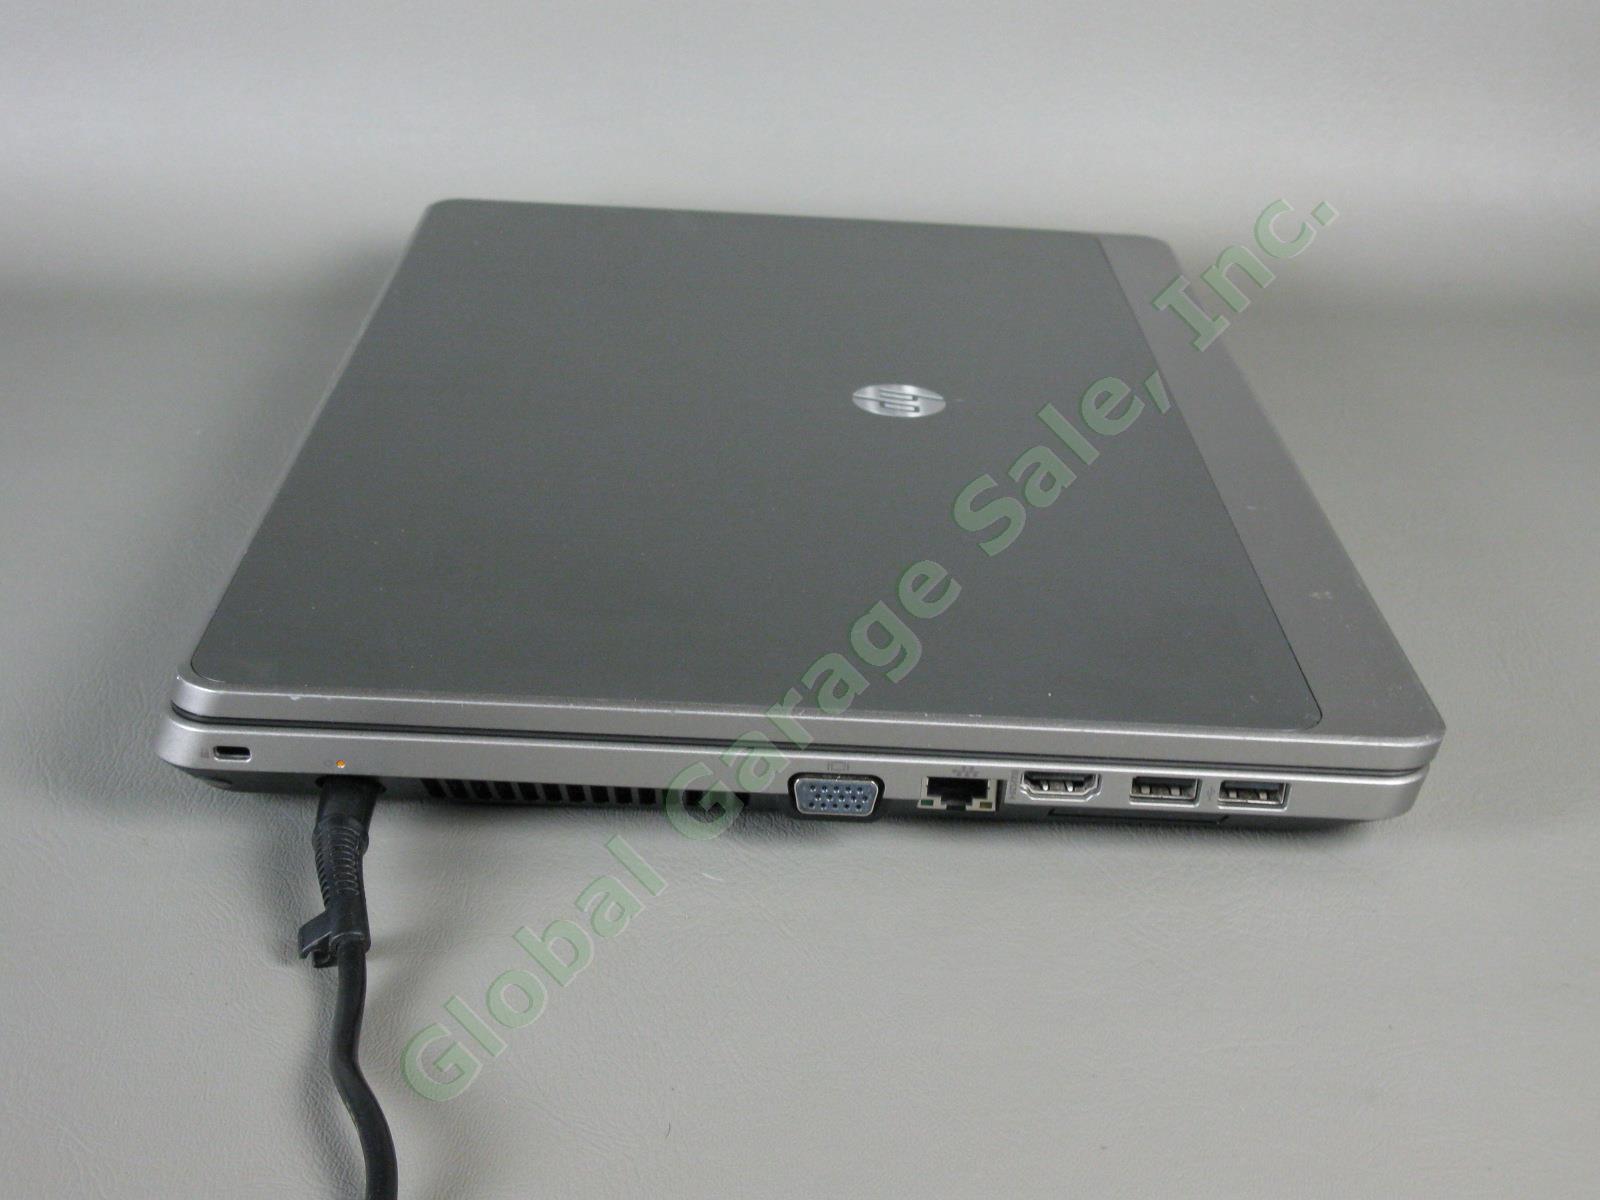 HP ProBook 4530s Laptop Computer Intel i5 2.30GHz 300GB HDD 2GB RAM Win 10 Pro 5